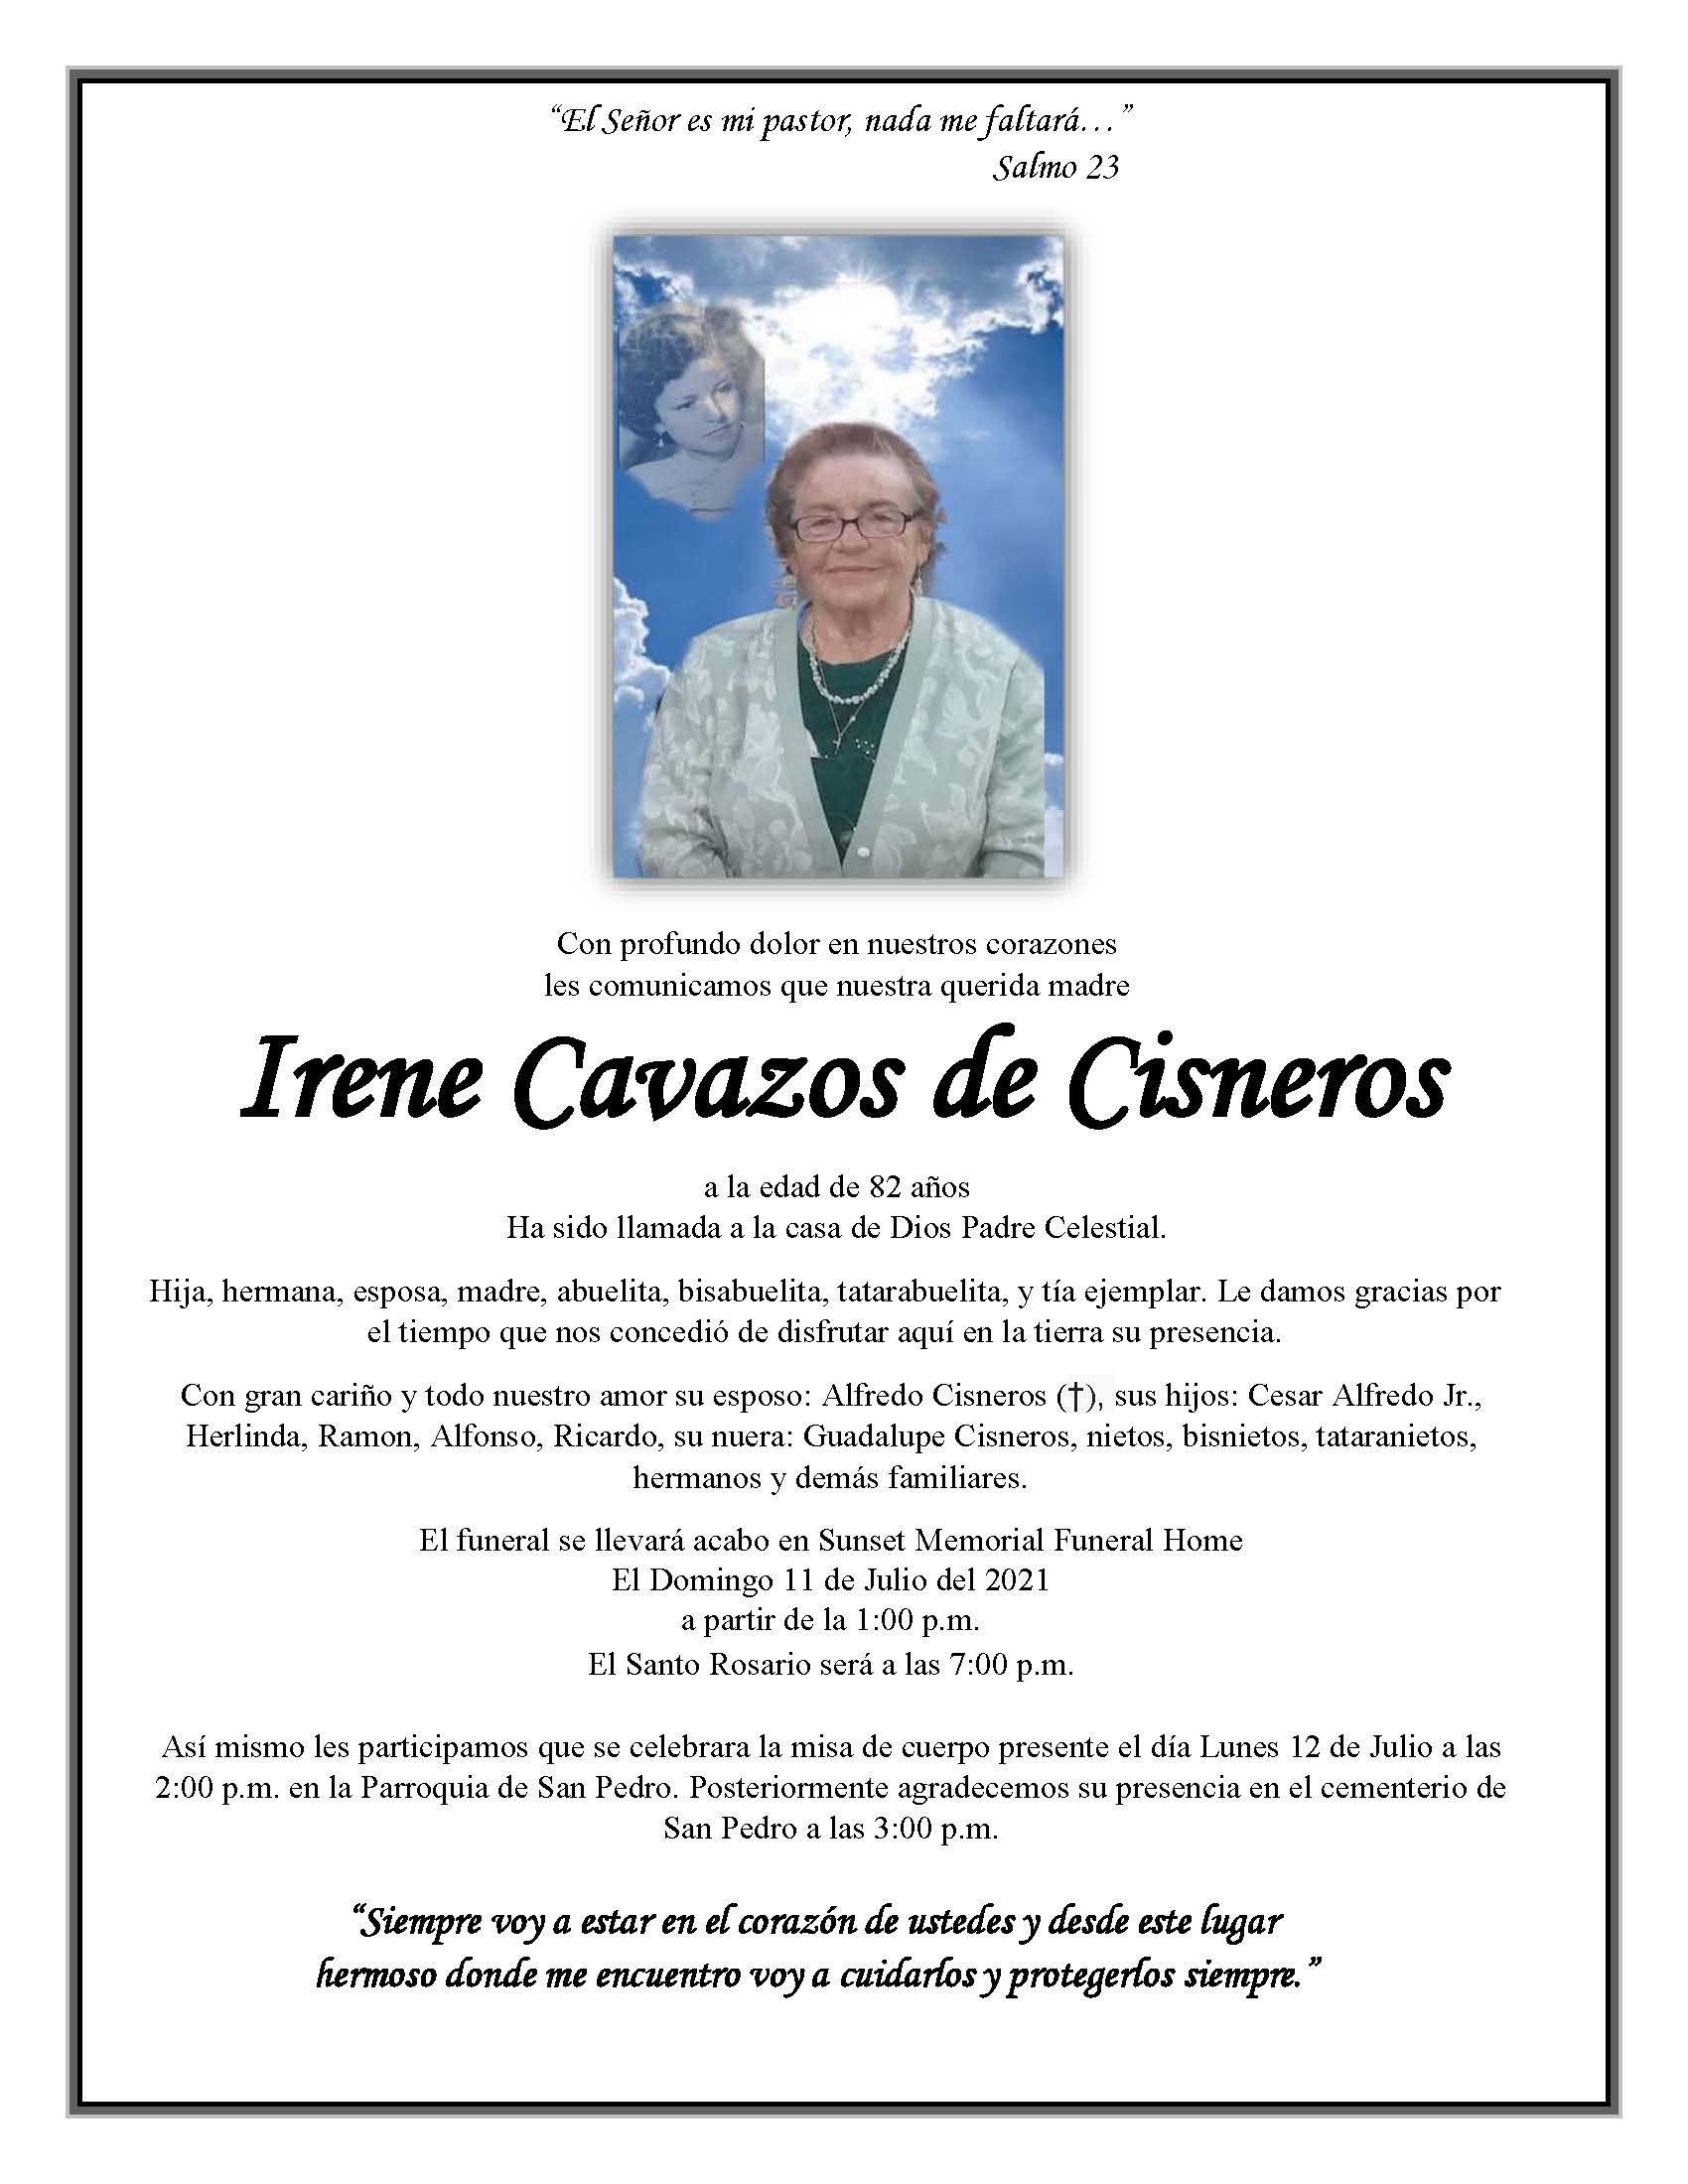 A poster of irene cavazos de cisneros